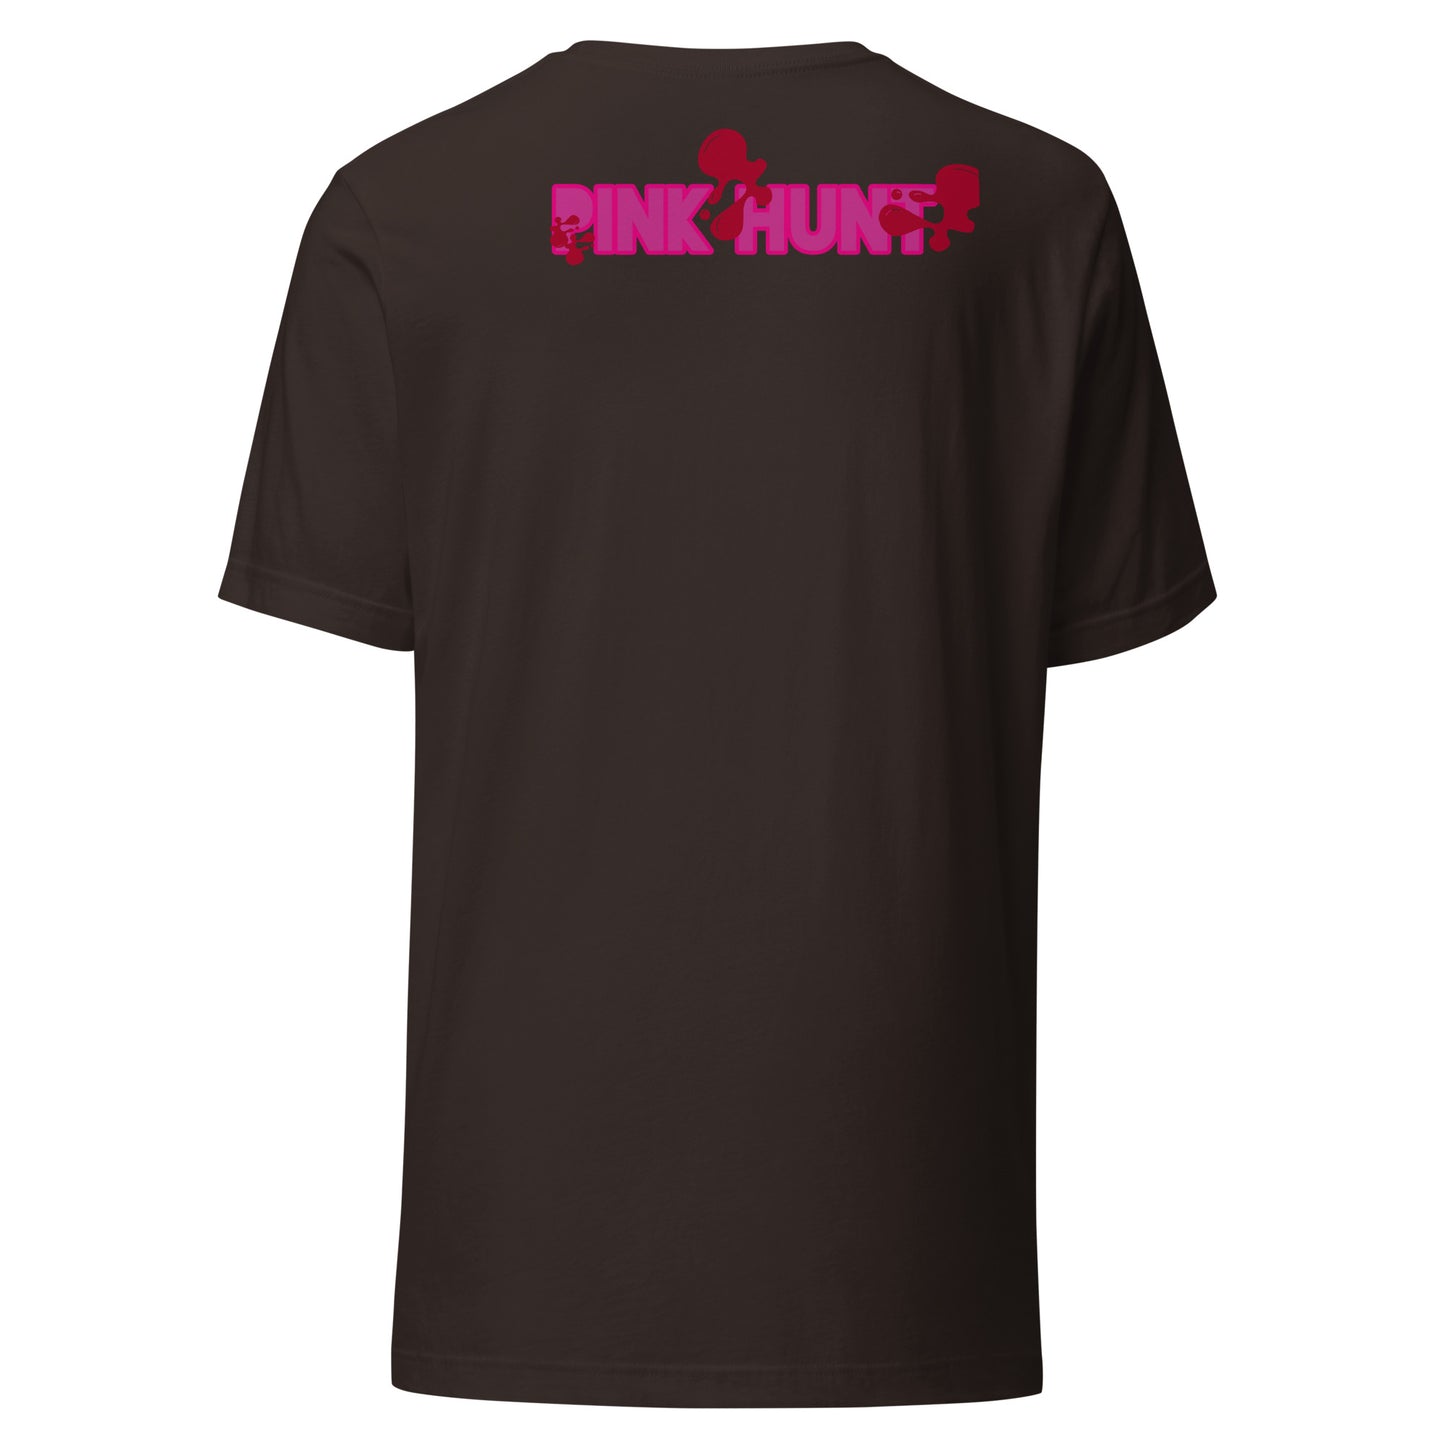 PINK HUNT - Unisex t-shirt